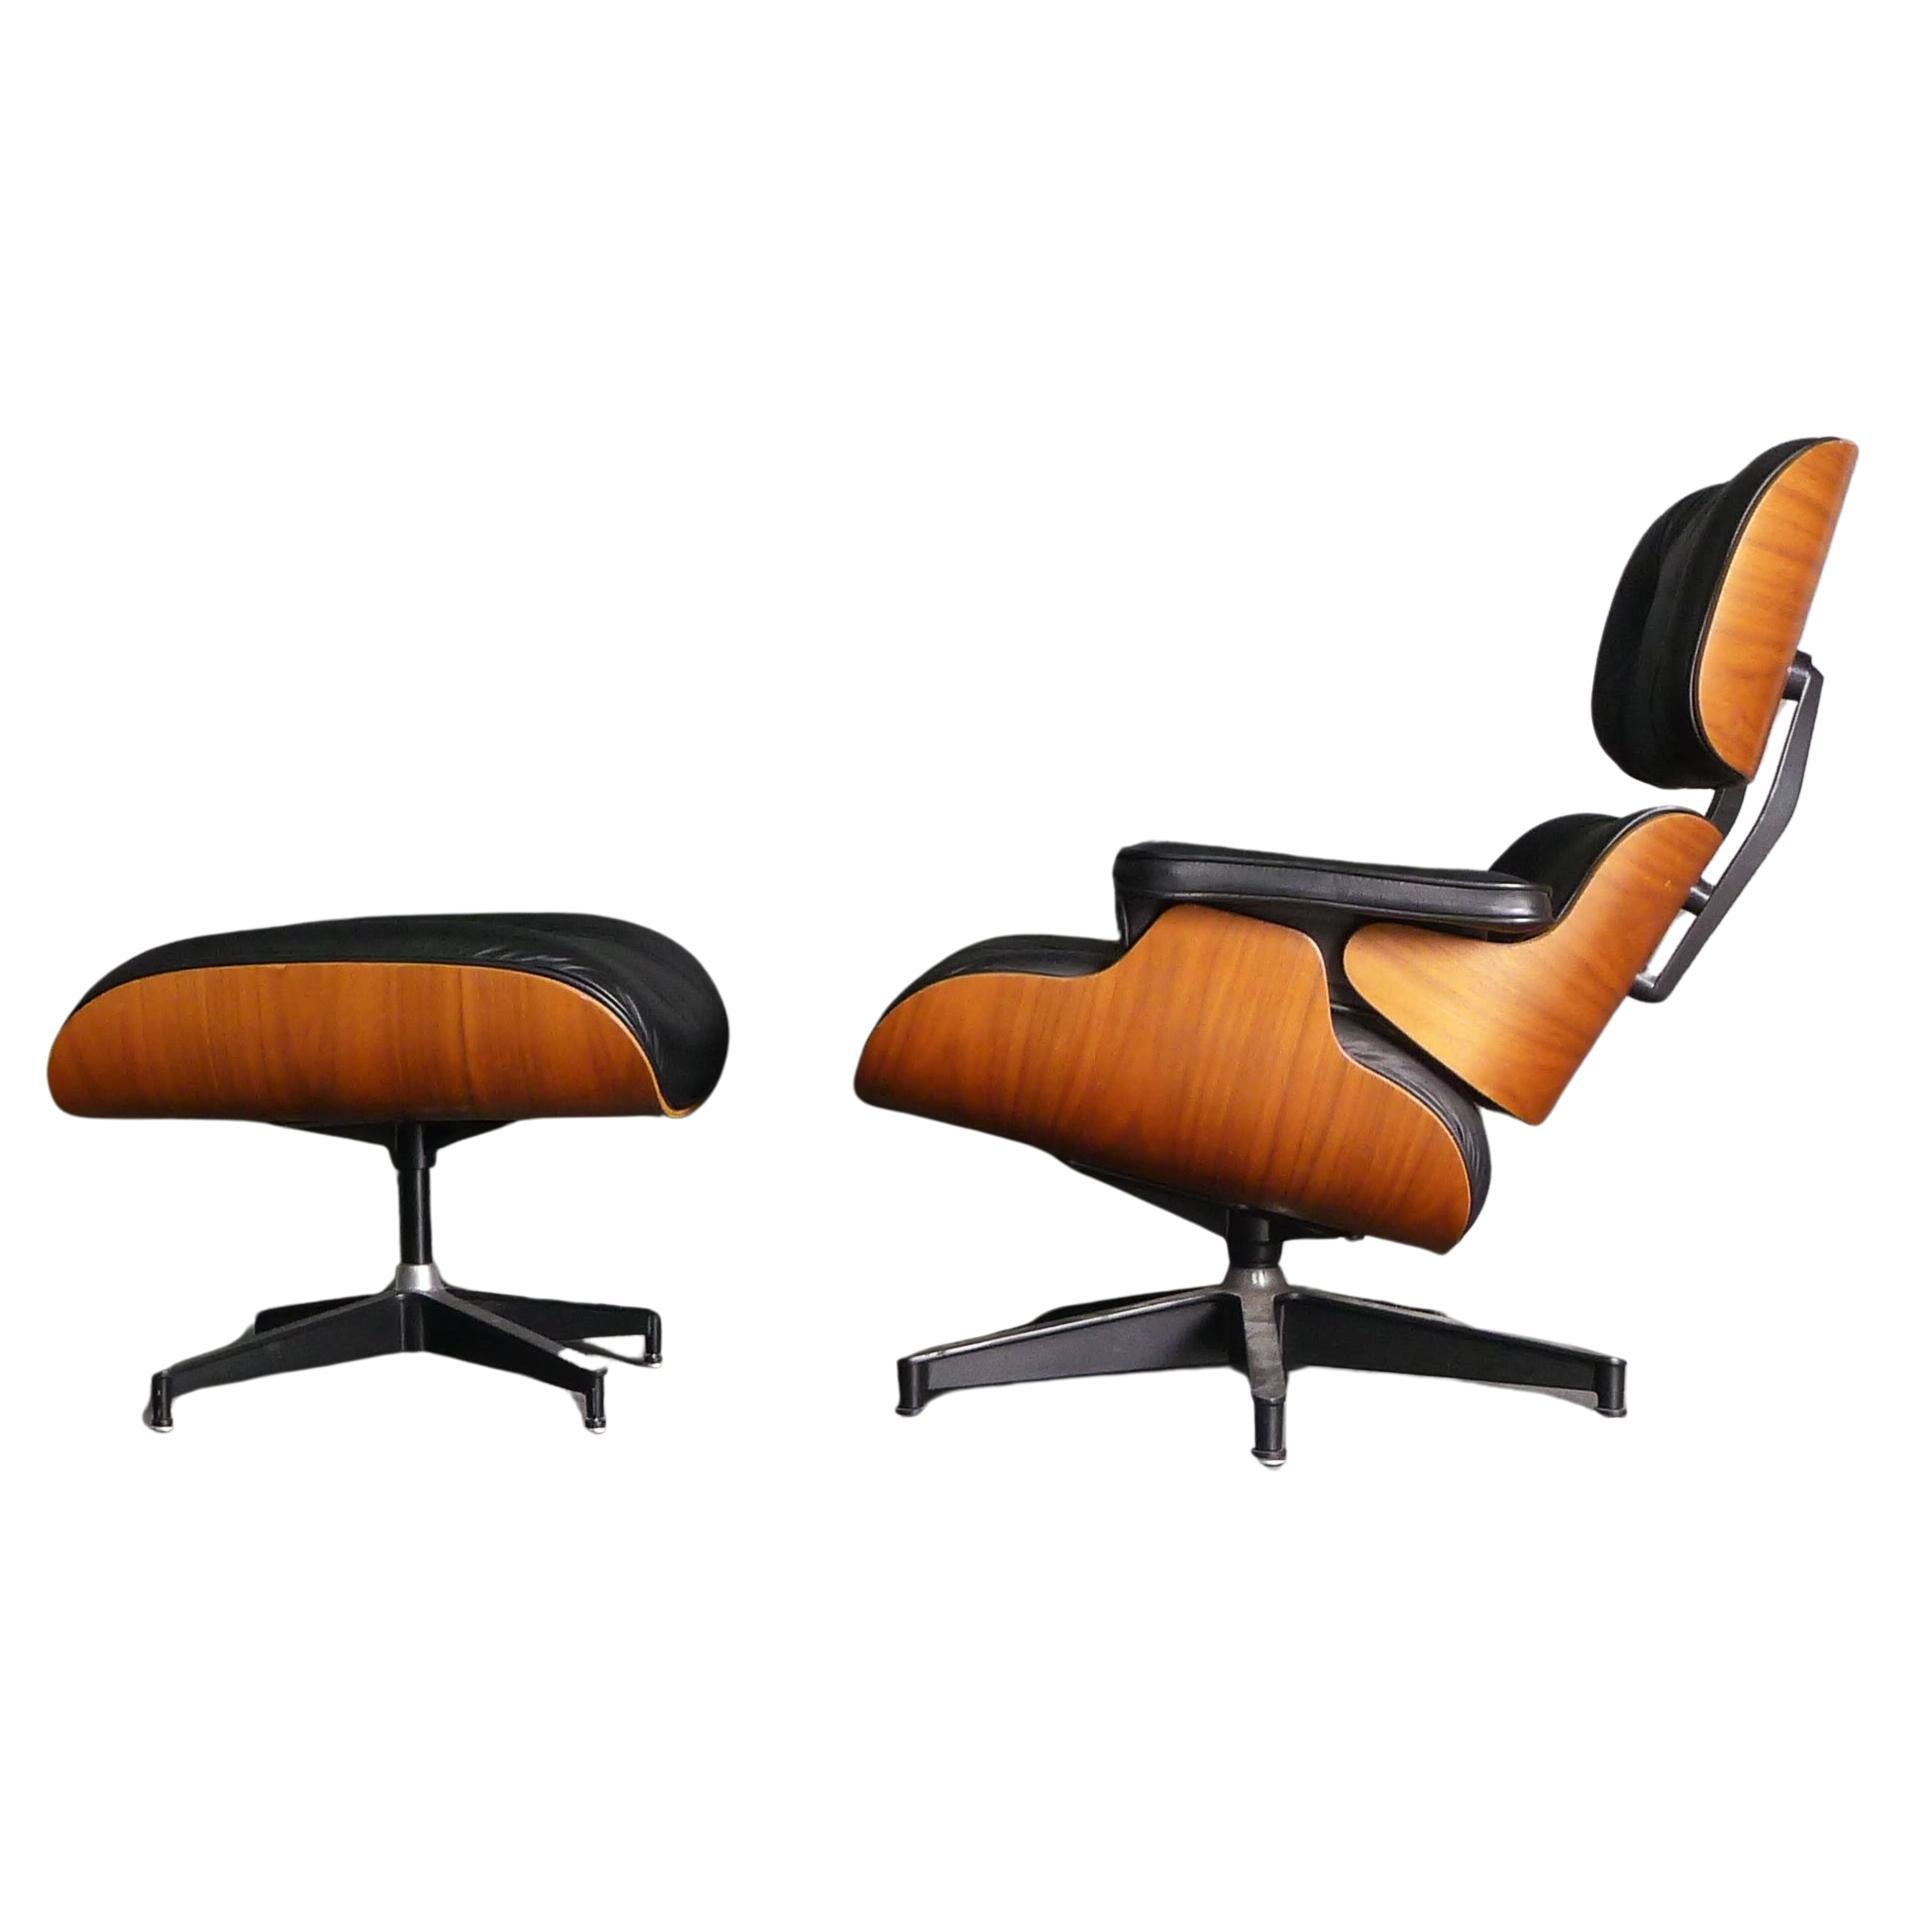 Eames Lounge Chair and Ottoman, model 670/671, Herman Miller, USA